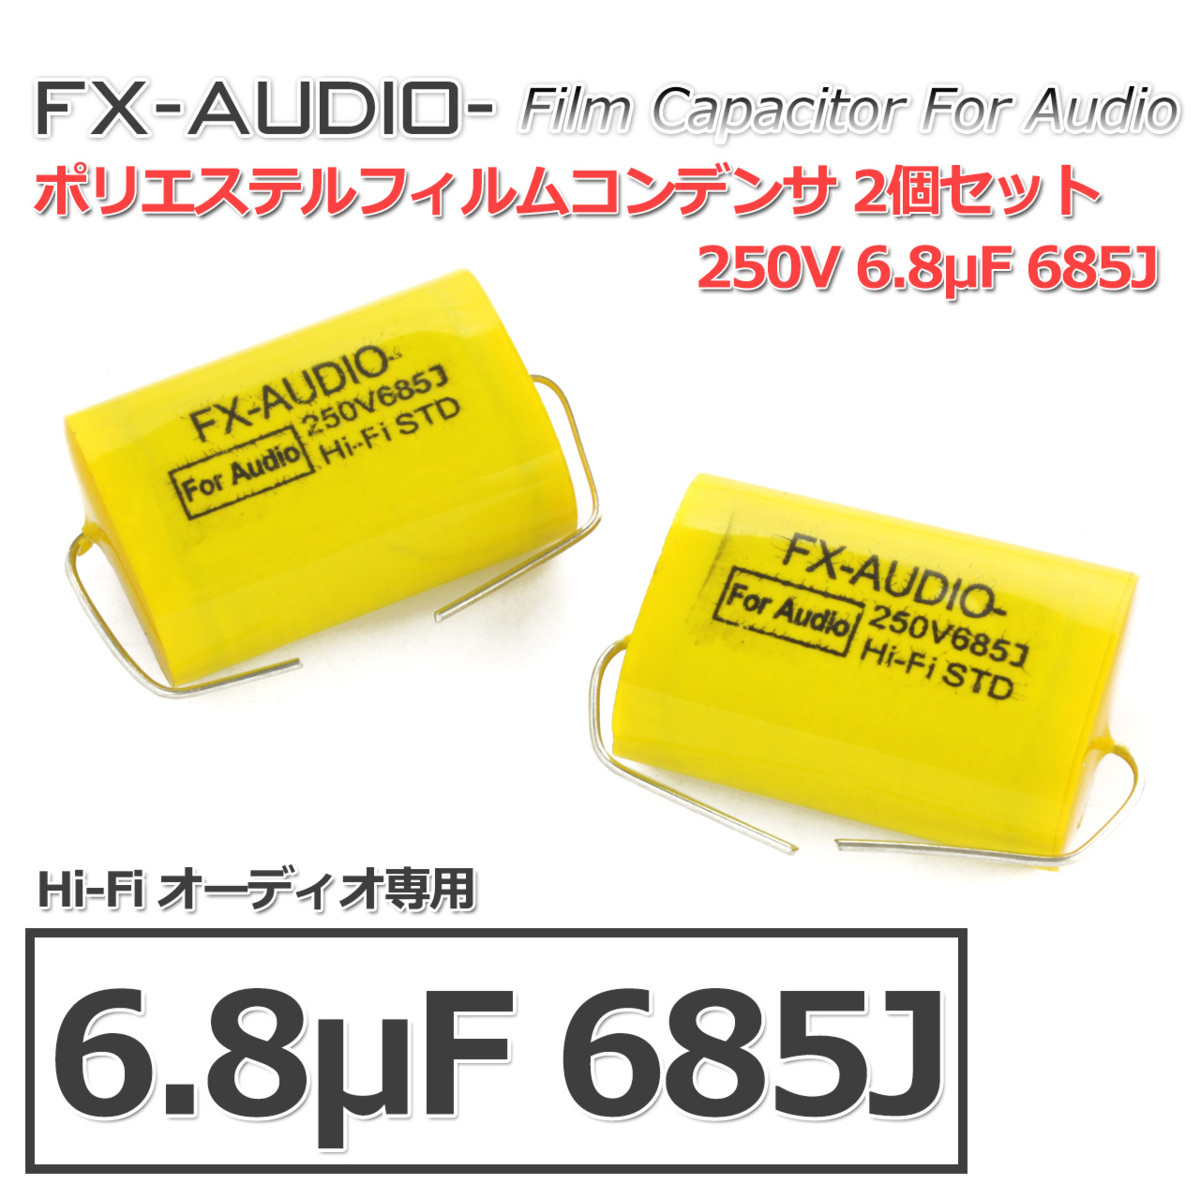 FX-AUDIO- 限定生産製品専用オーディオ用ポリエステルフィルムコンデンサ 250V 6.8μF 685J 2個セット ツイーター用・ネットワーク用にも_画像1